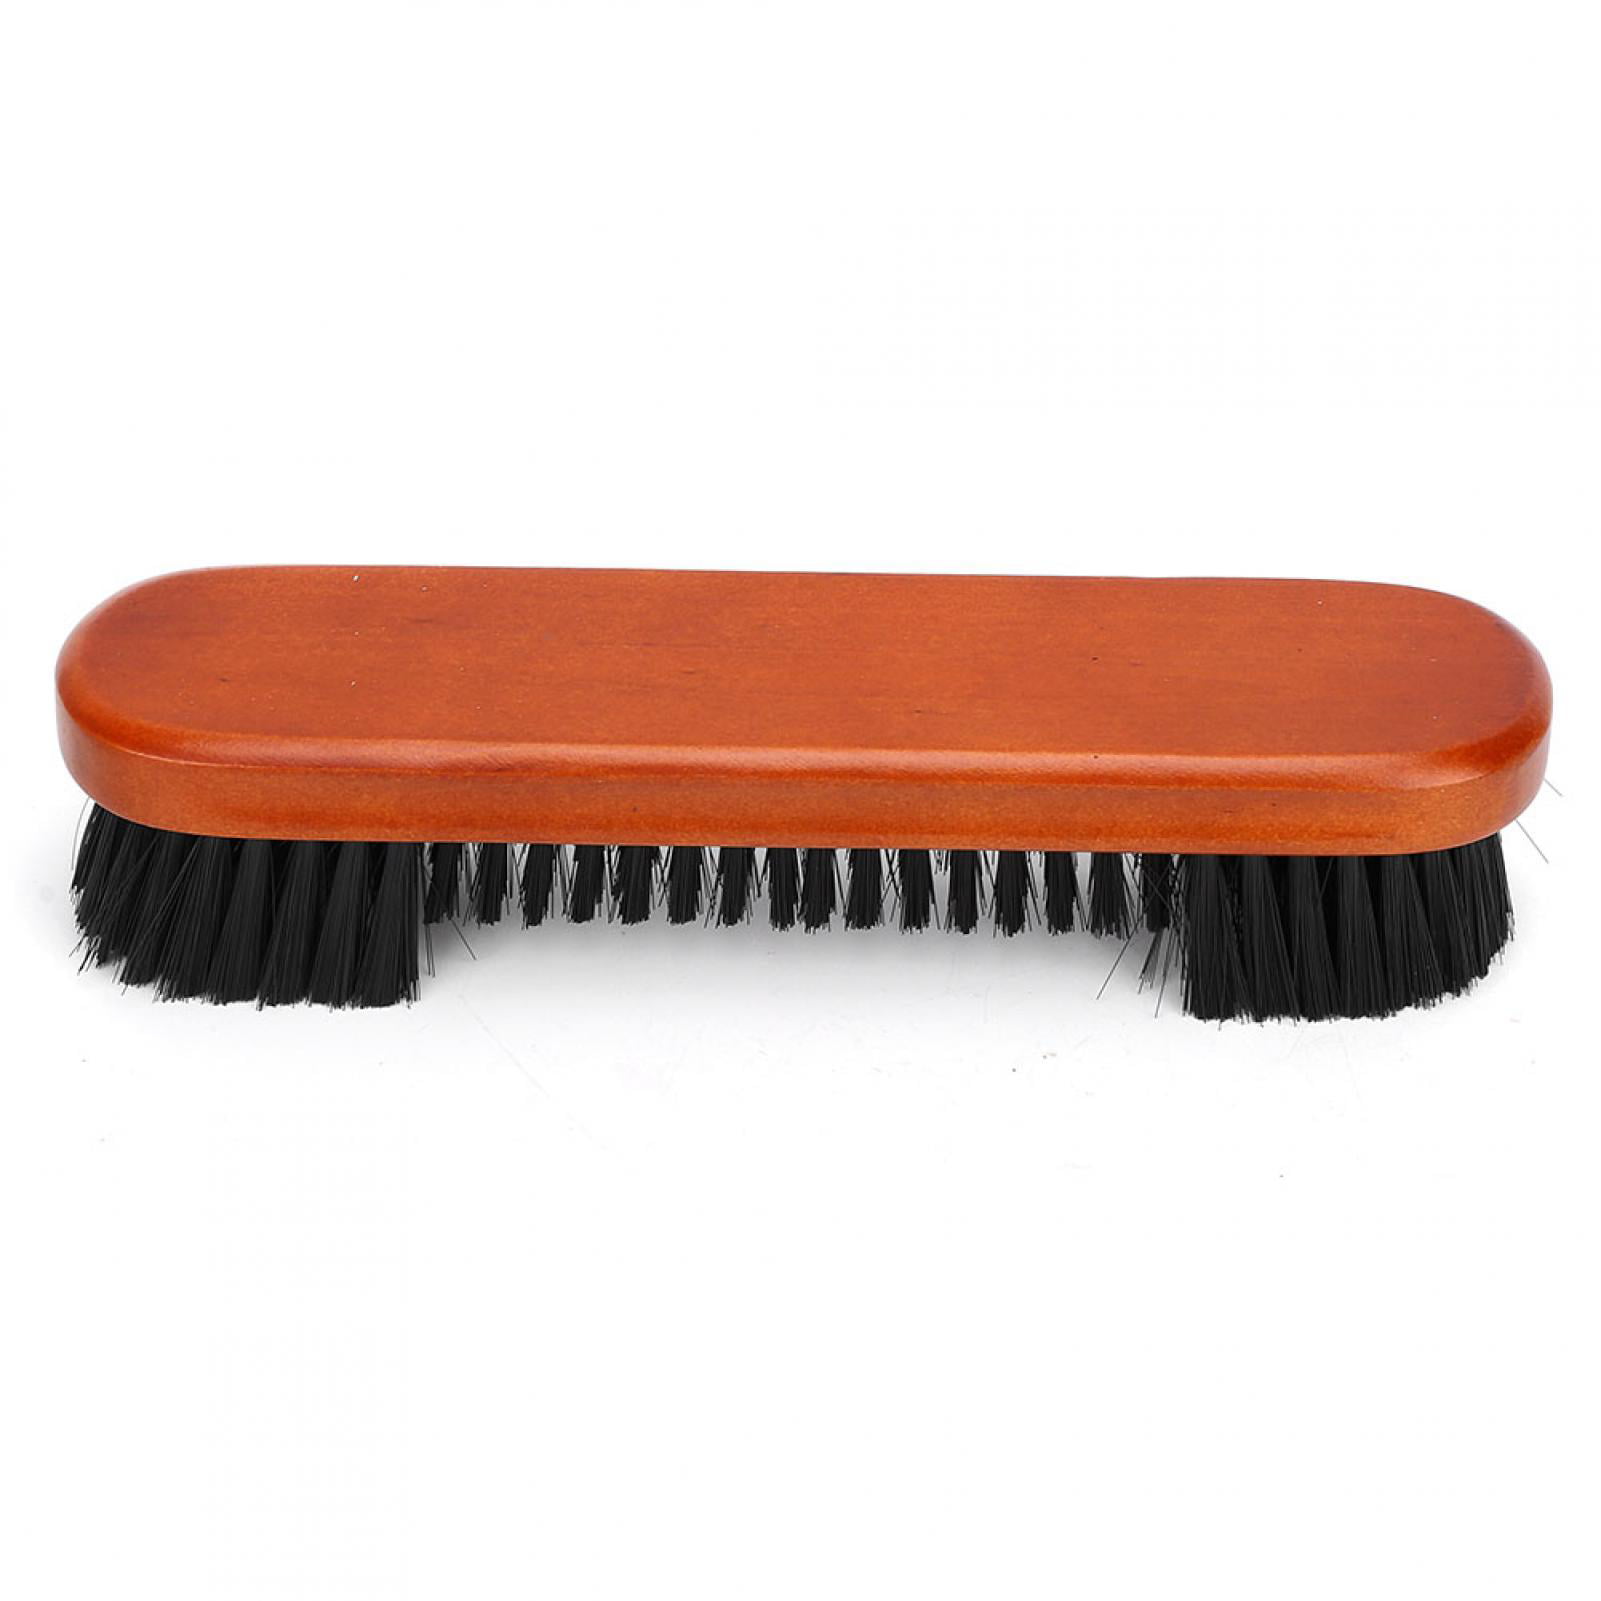 2pcs Pool Billiard Snooker Table Brush Hair Sweep Rail Clean Tool Cleaning Set 